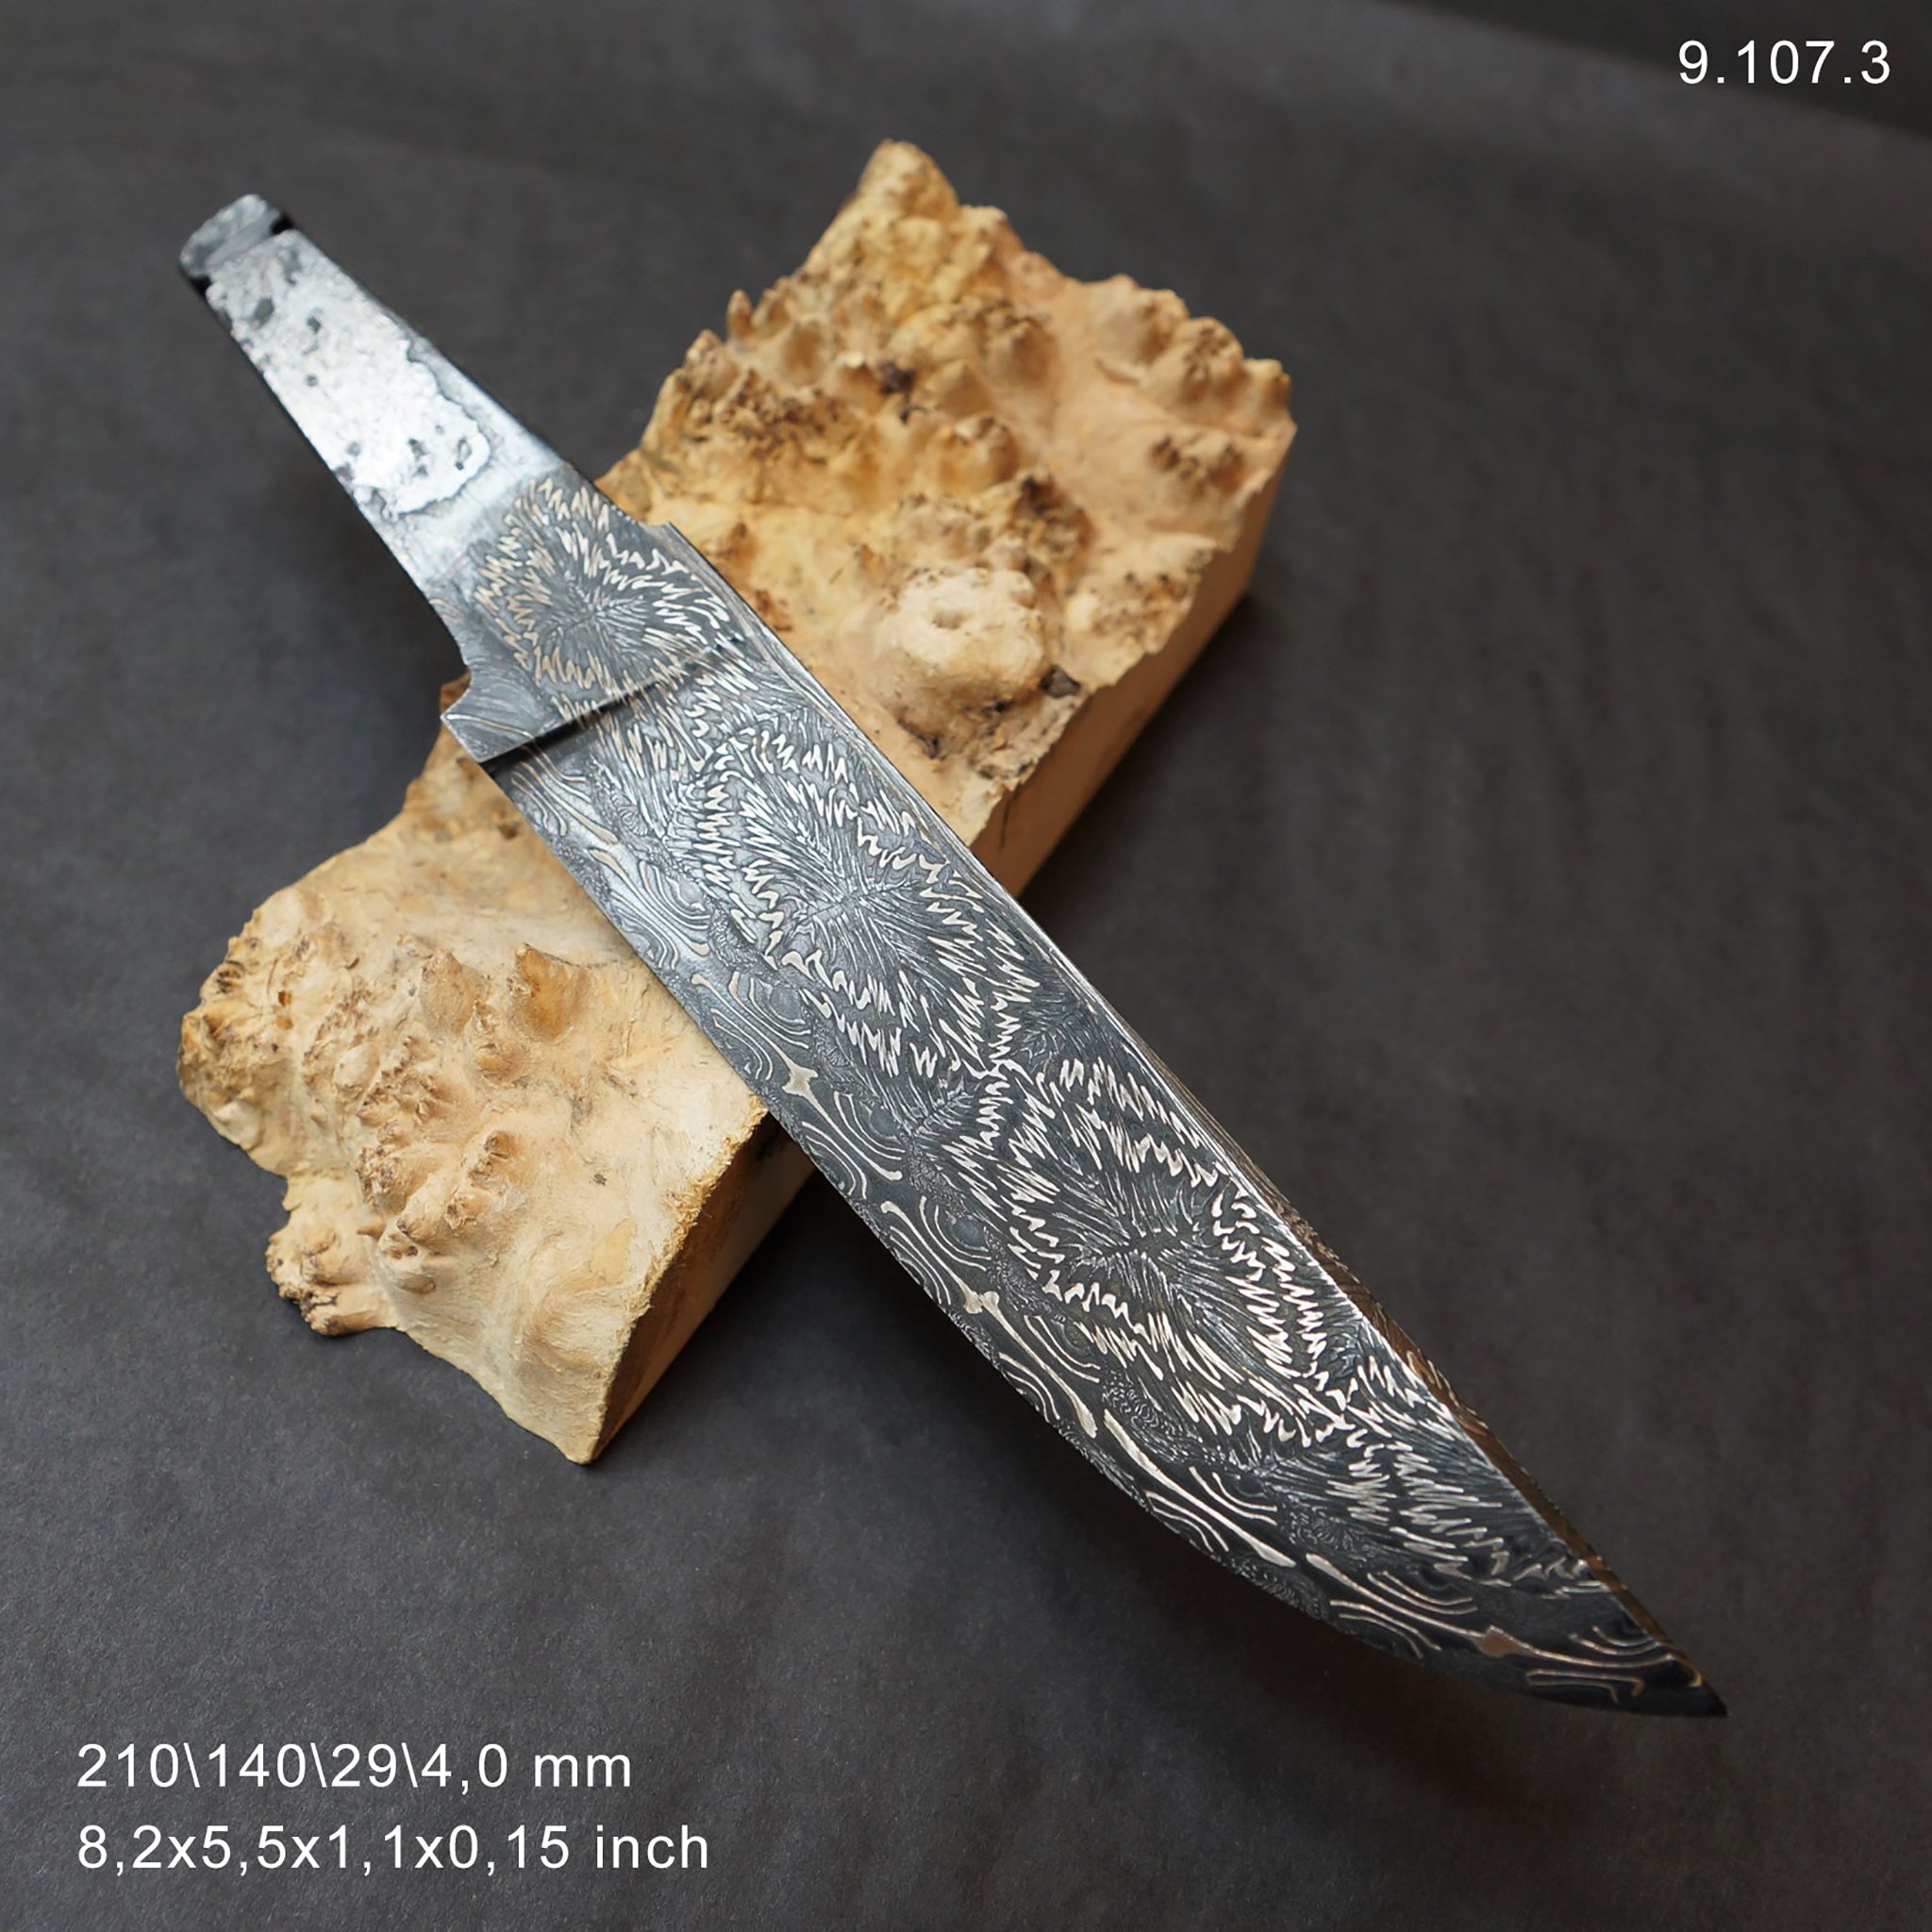 3 Inch Blade Handmade Damascus Steel Skinning Knife